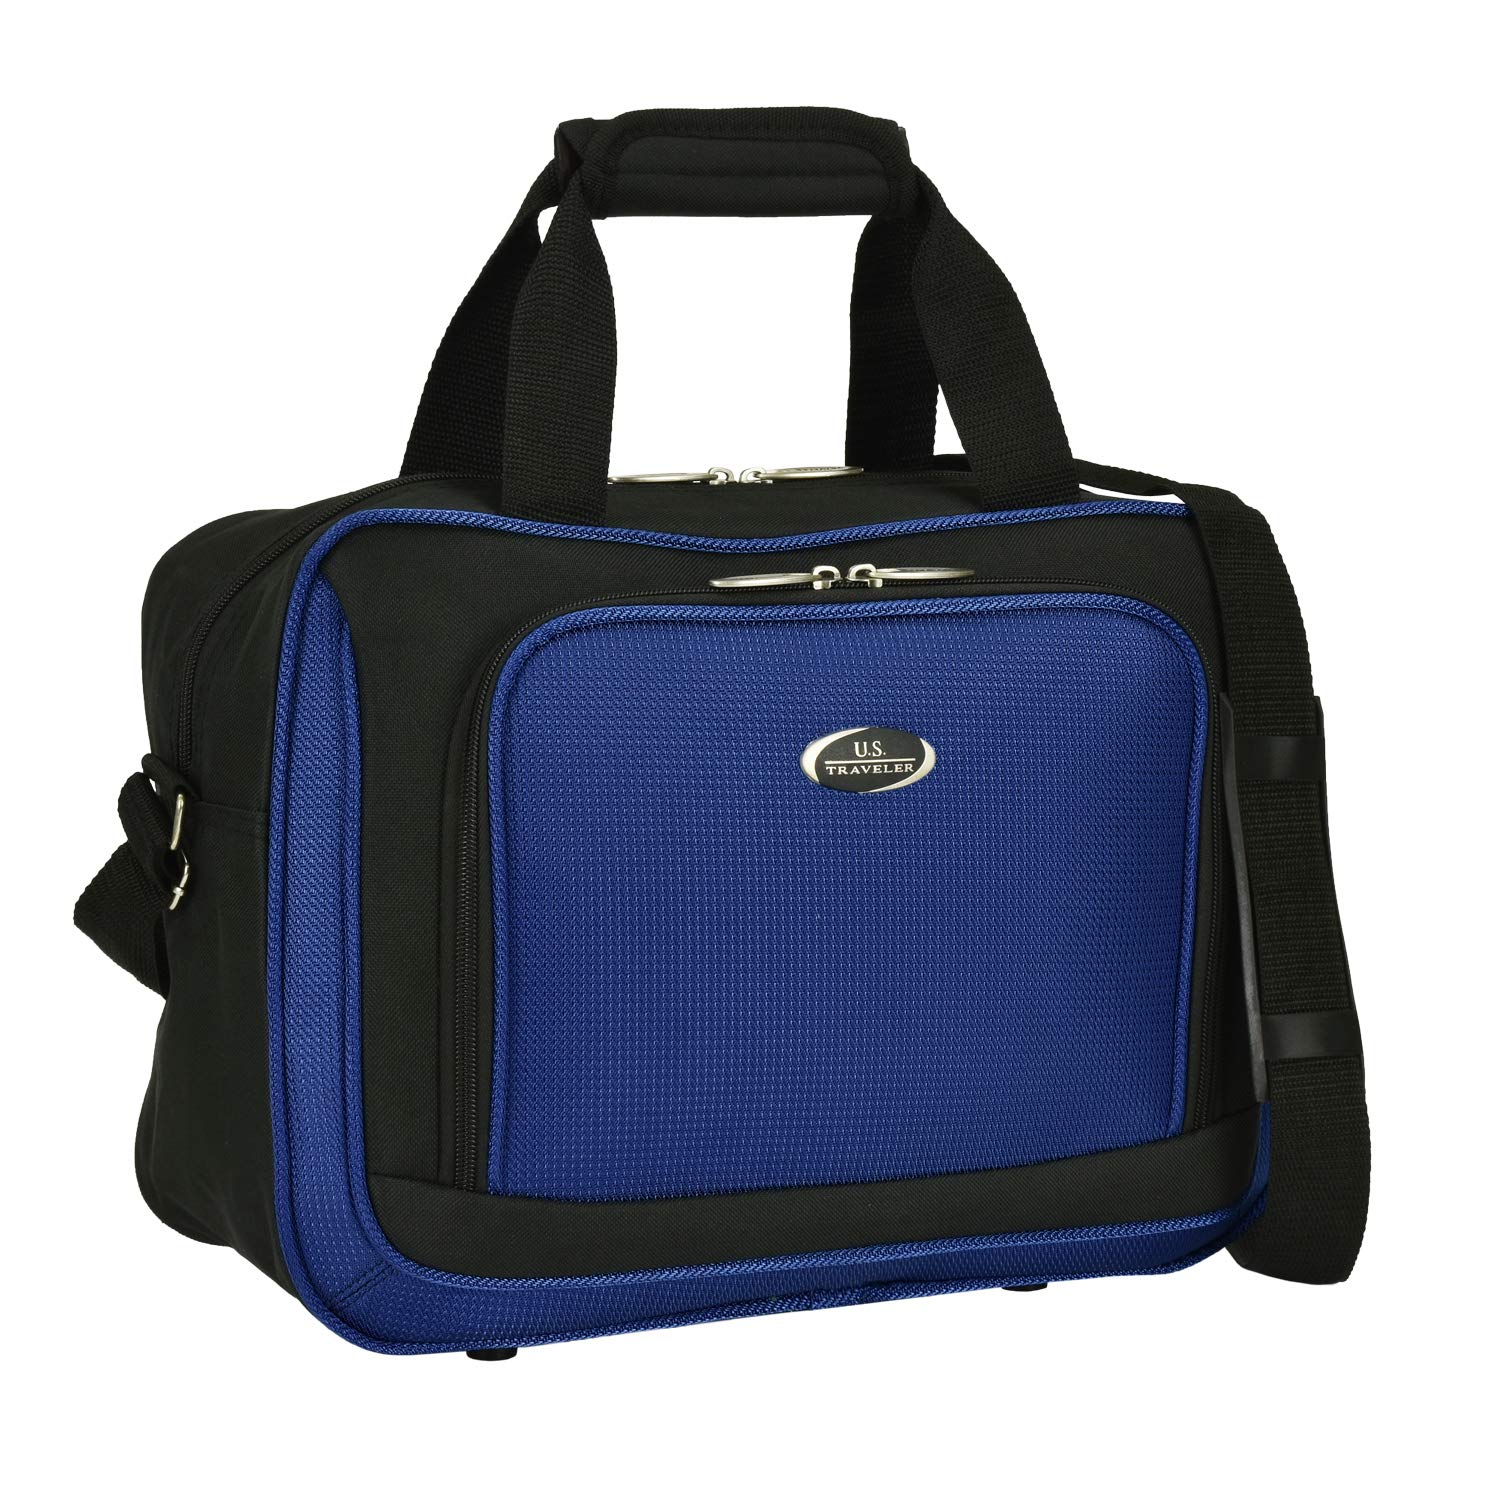 U.S. Traveler New Yorker Lightweight Softside Expandable Travel Rolling Luggage Set, Blue, 4-Piece (15/21/25/29)